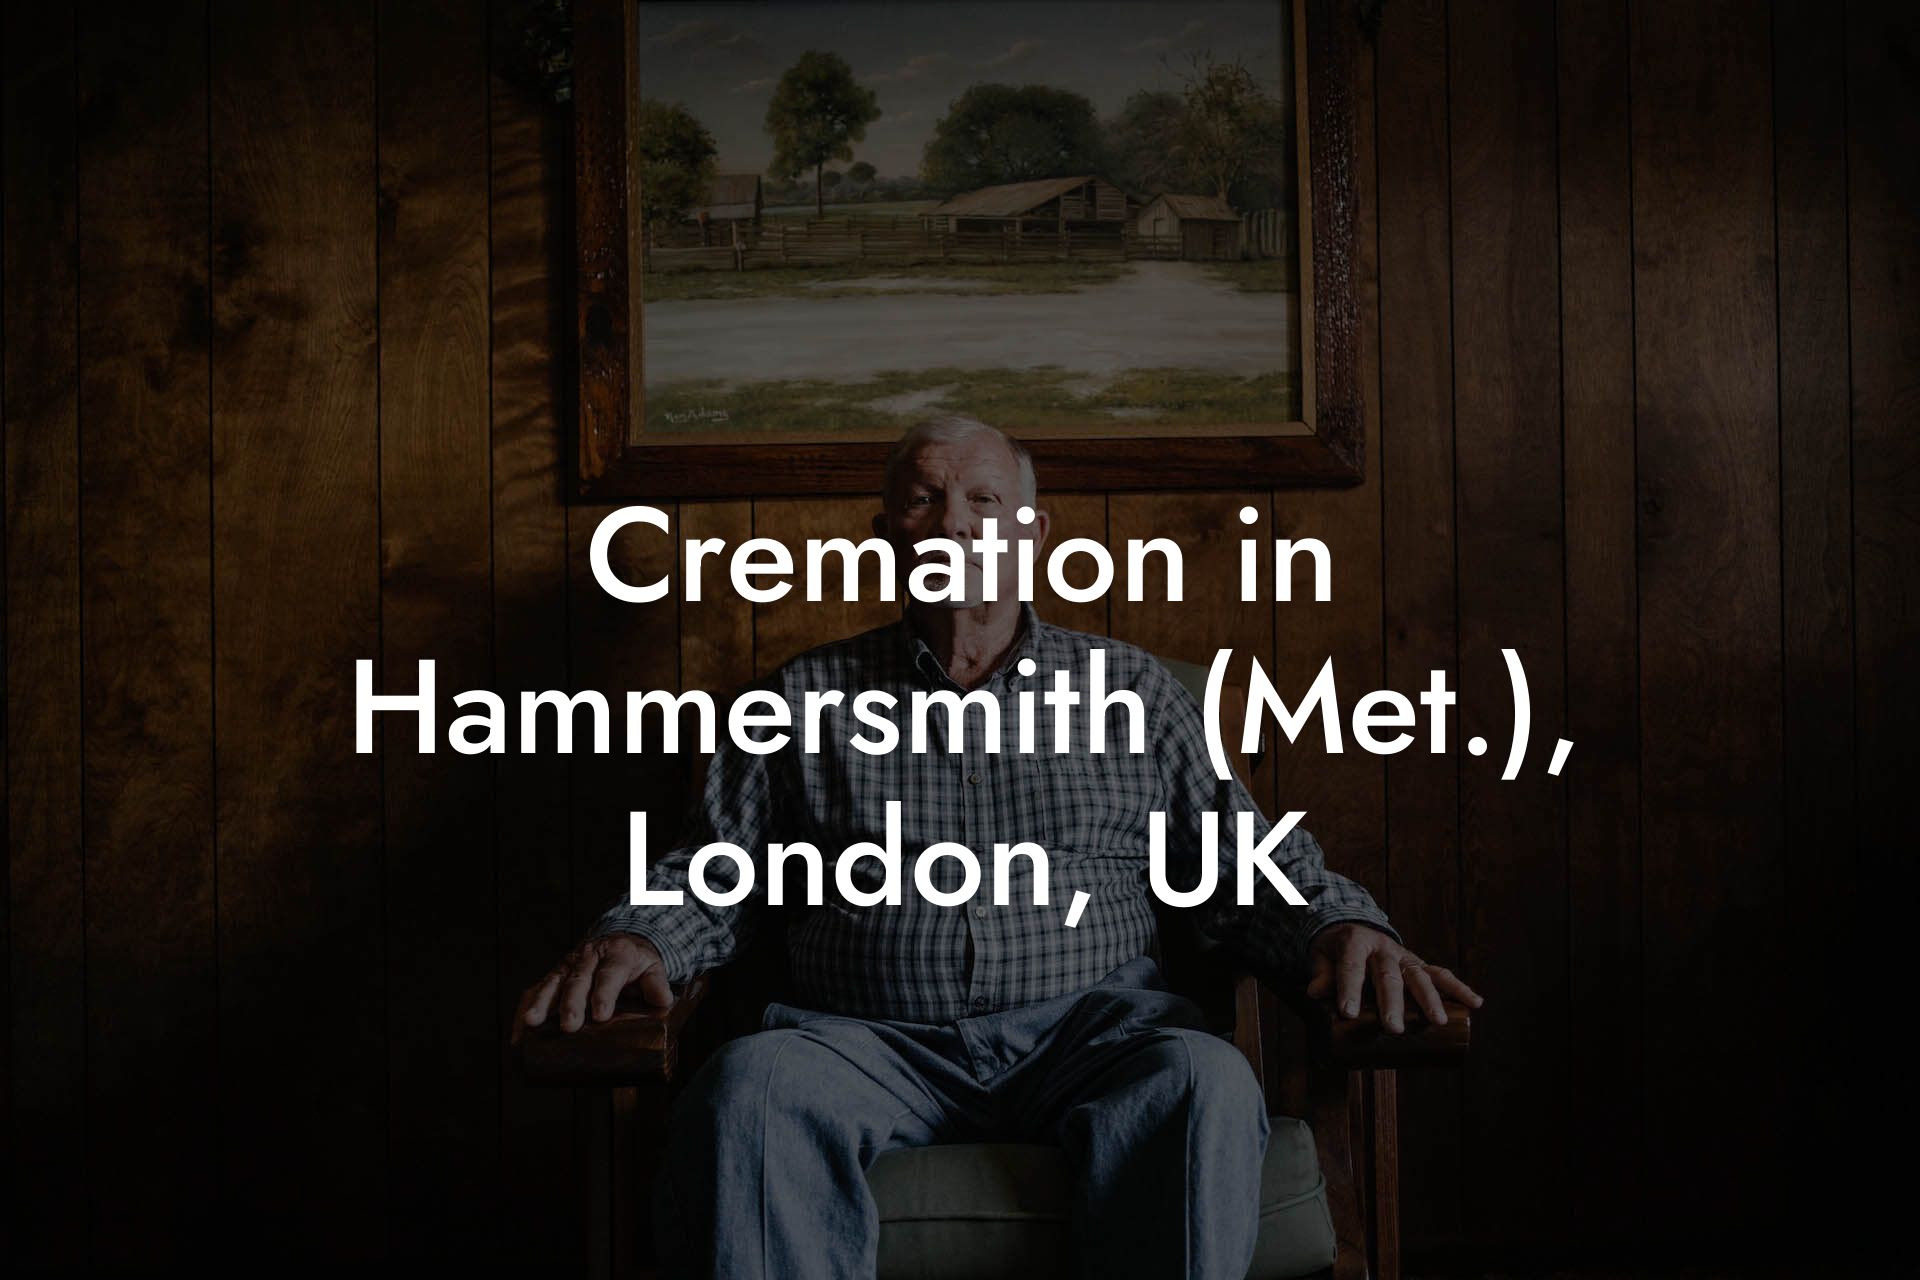 Cremation in Hammersmith (Met.), London, UK